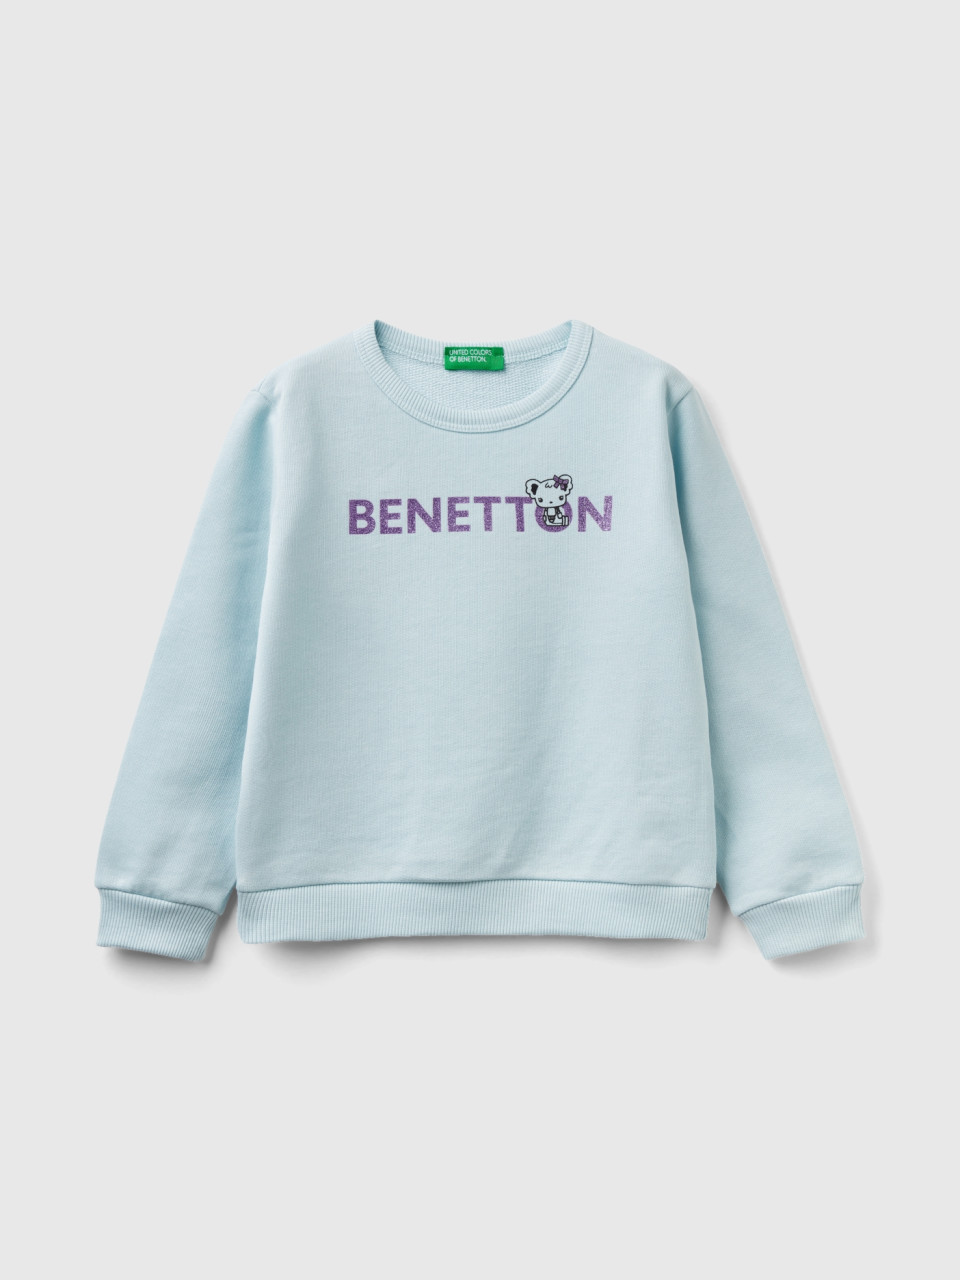 Benetton, 100% Organic Cotton Sweatshirt With Logo, Aqua, Kids